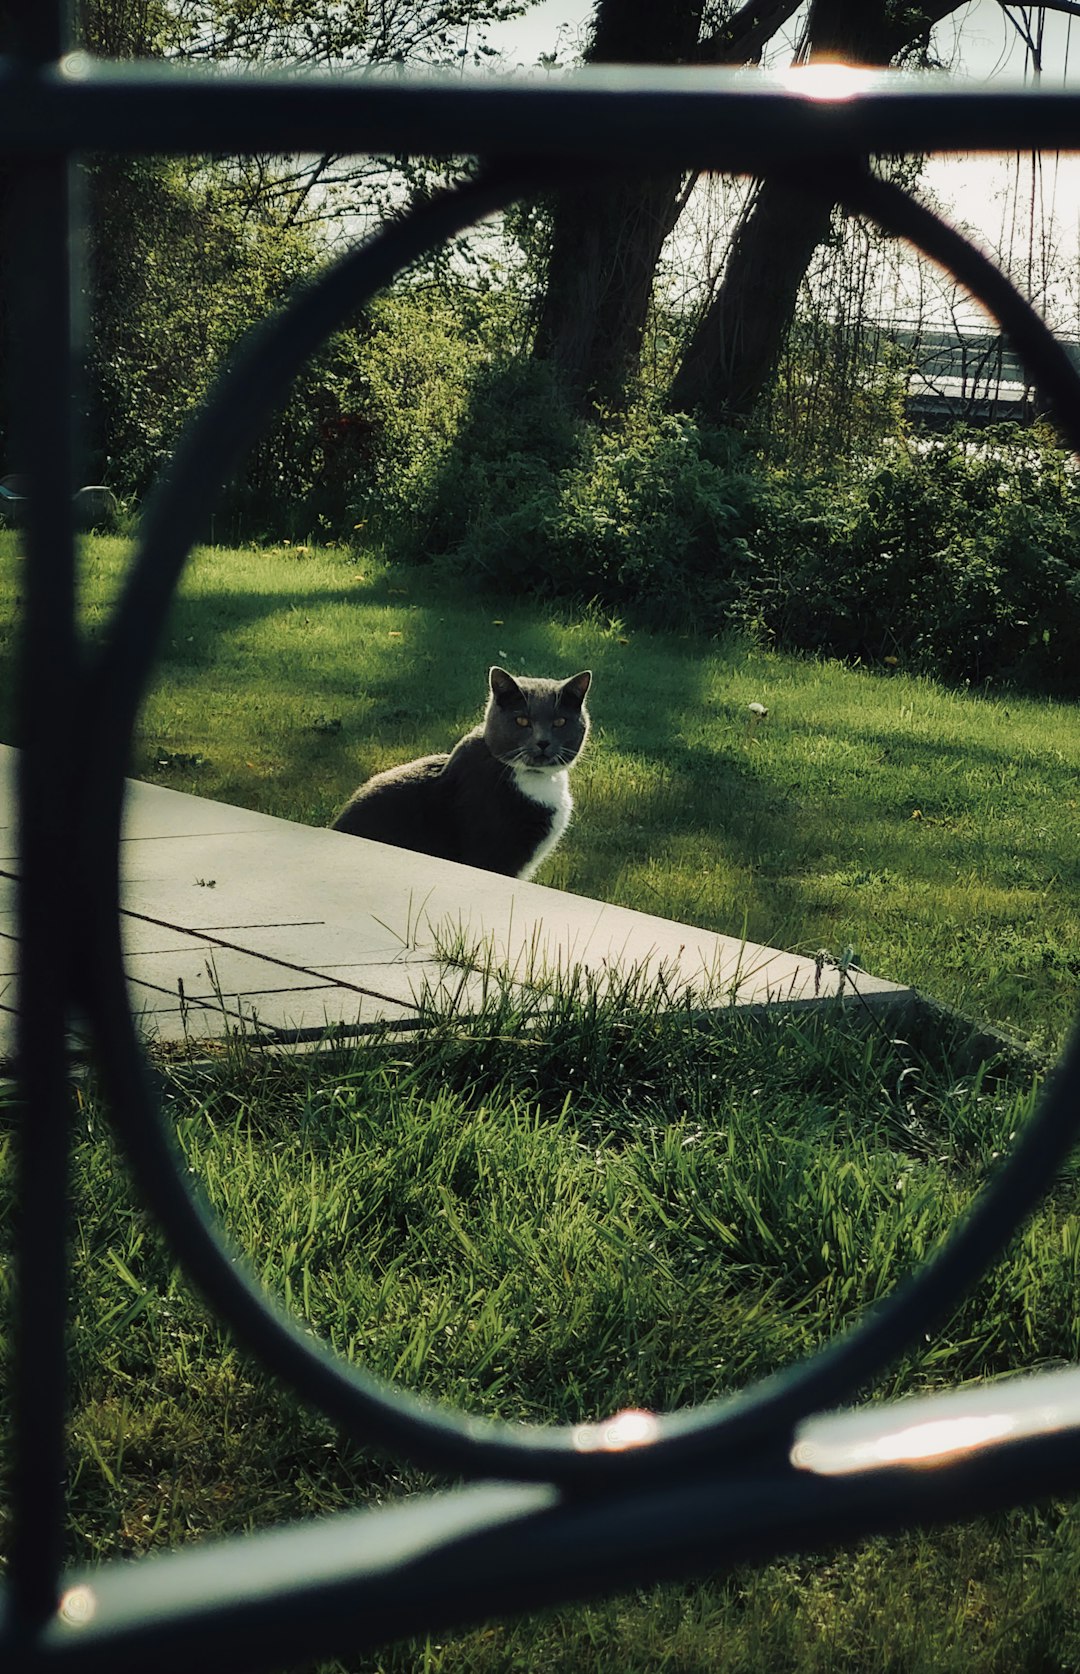 British Shorthair cat sitting on grassy patio.